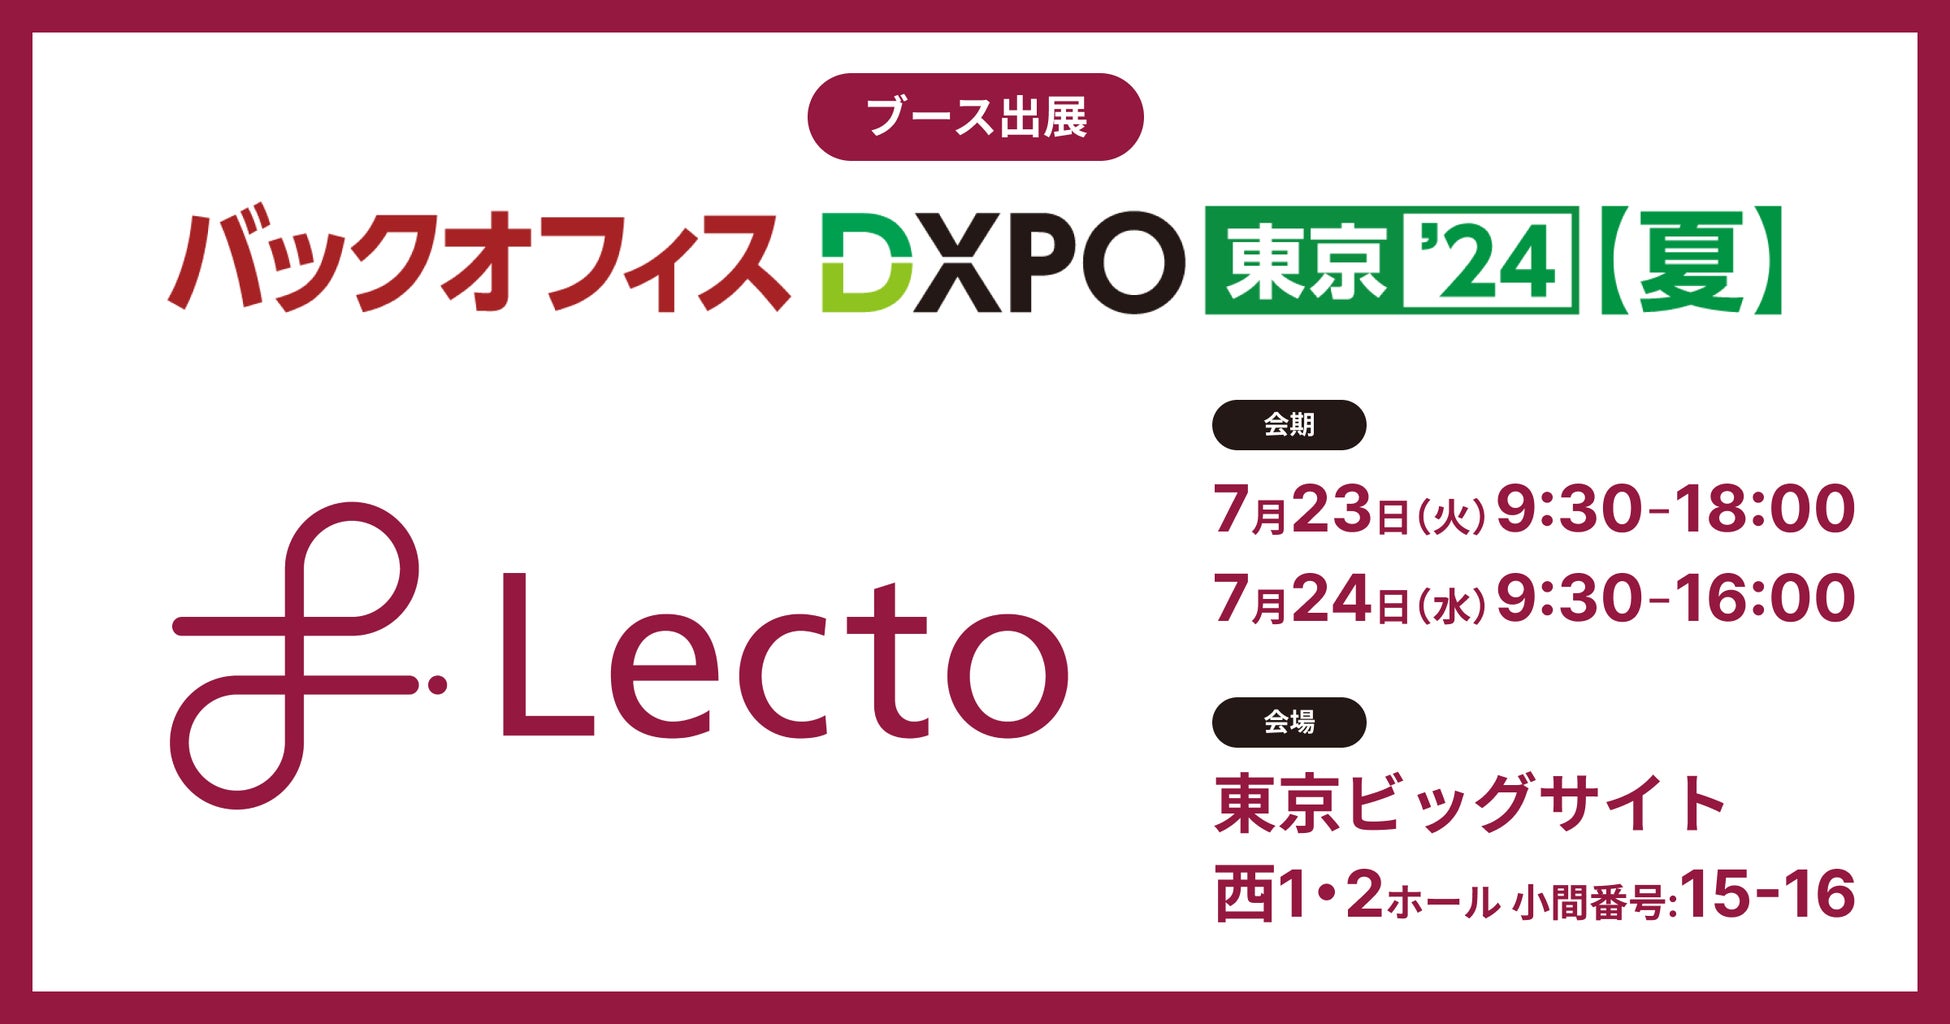 Lecto（レクト）、バックオフィスDXPO東京’24【夏】（2024年7月23日-24日）に出展